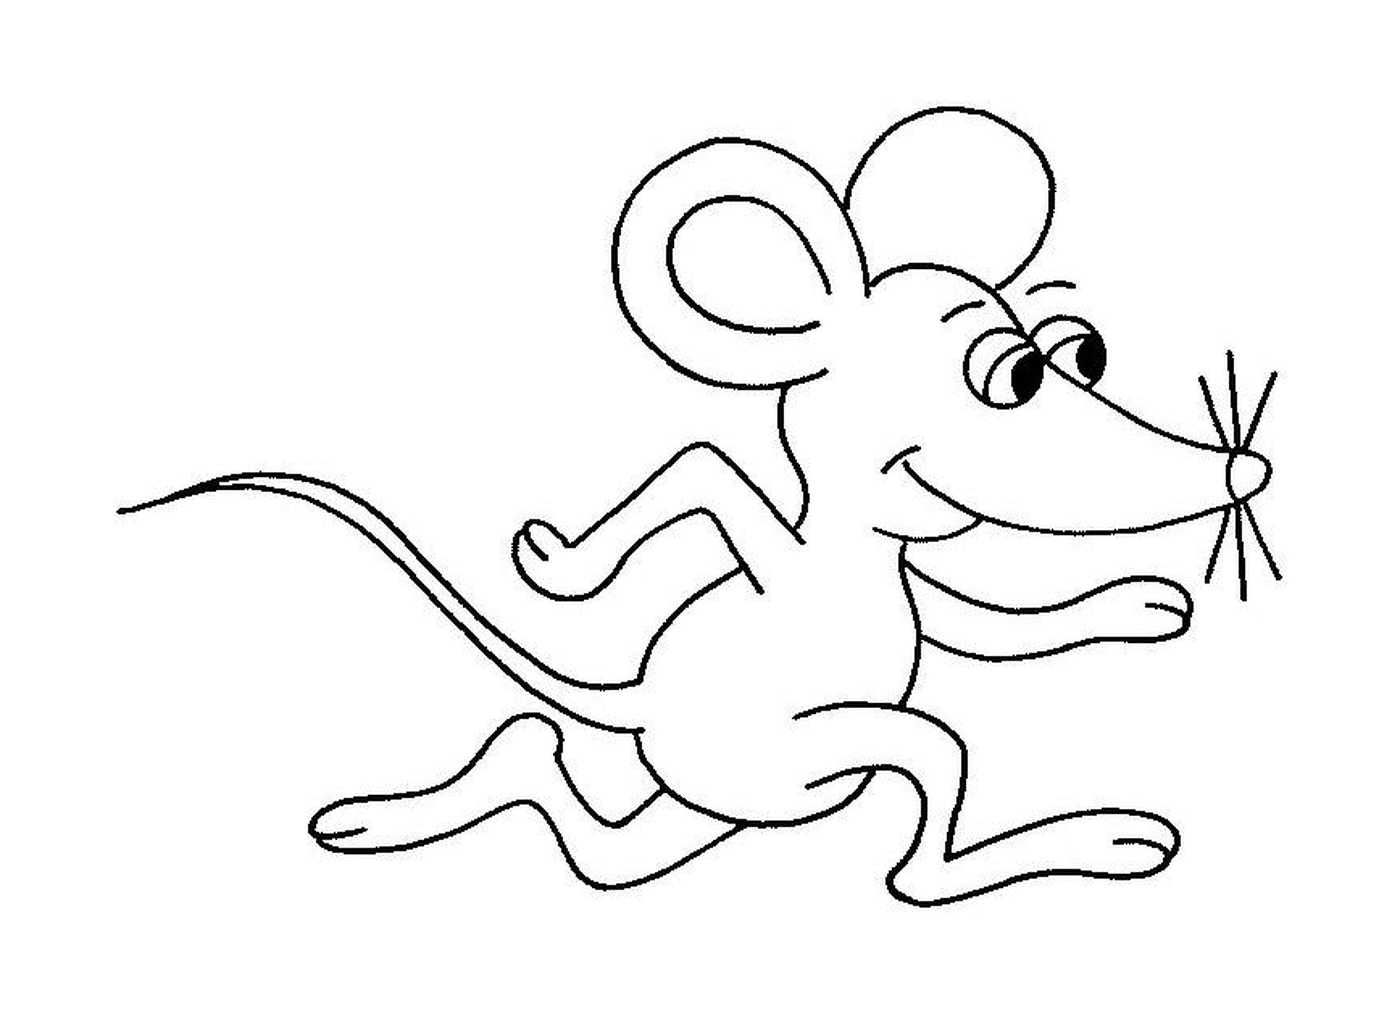   Une souris qui court 